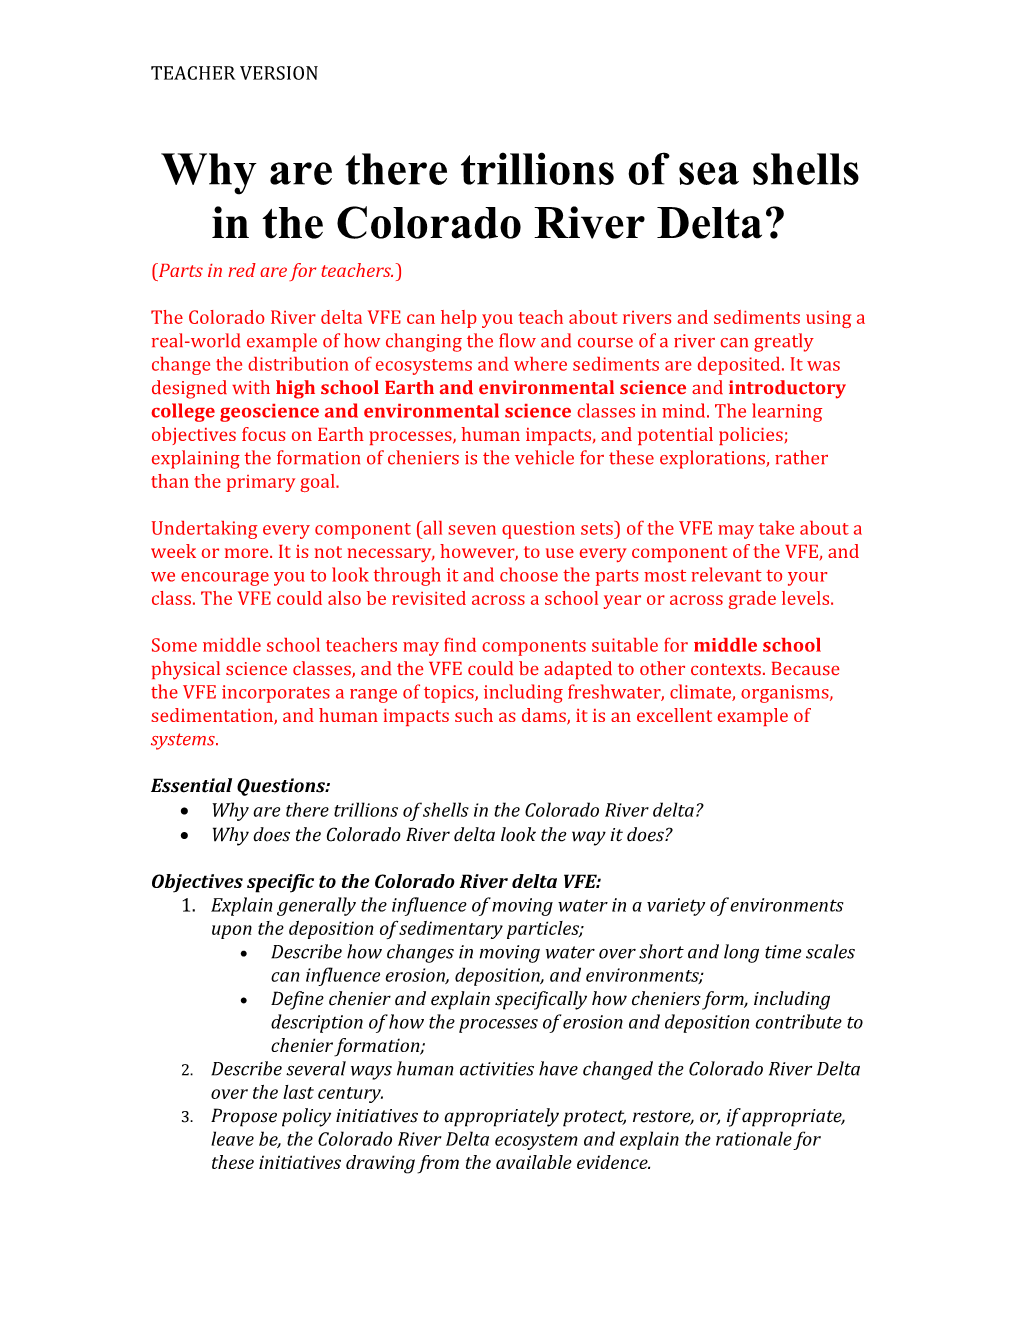 Why Are There Trillions of Sea Shells in the Colorado River Delta?